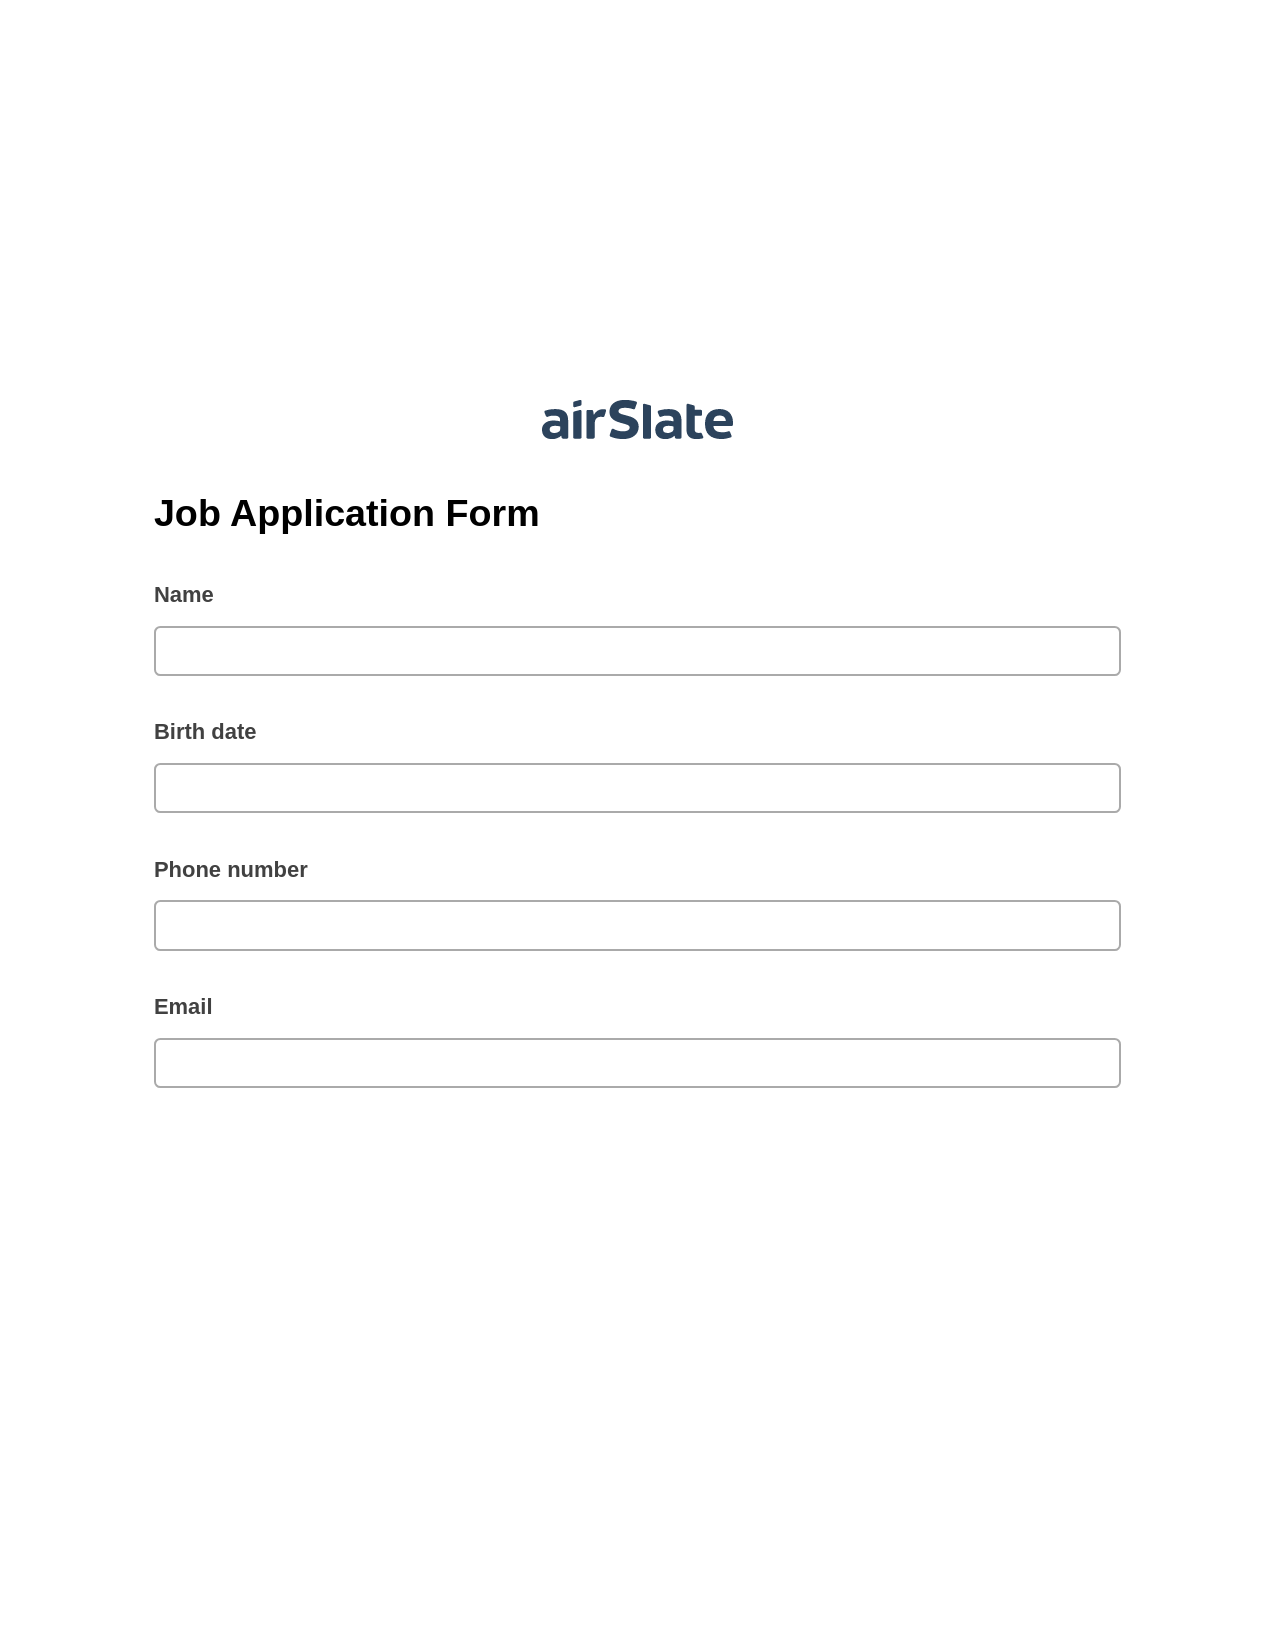 Job Application Form Pre-fill from MySQL Bot, Update NetSuite Records Bot, Google Drive Bot